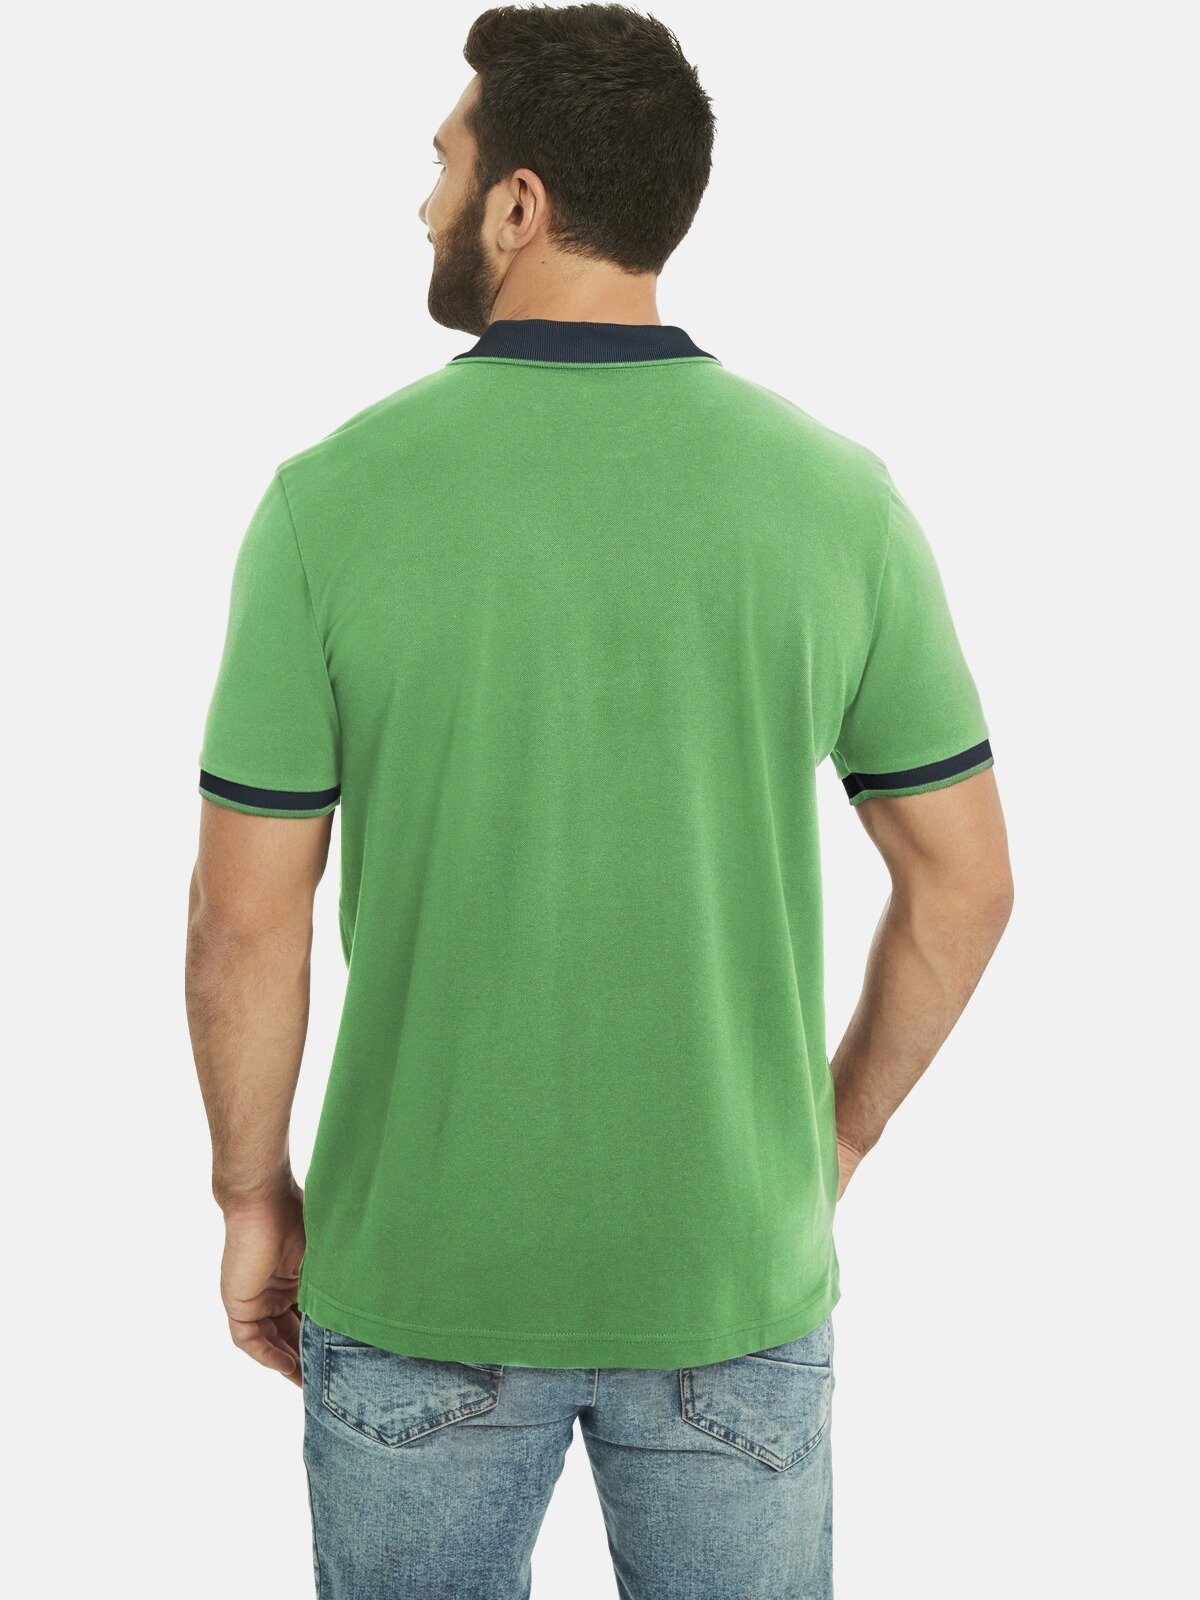 Jan Vanderstorm Poloshirt aus luftigem grün Baumwollpikee LAVRANS